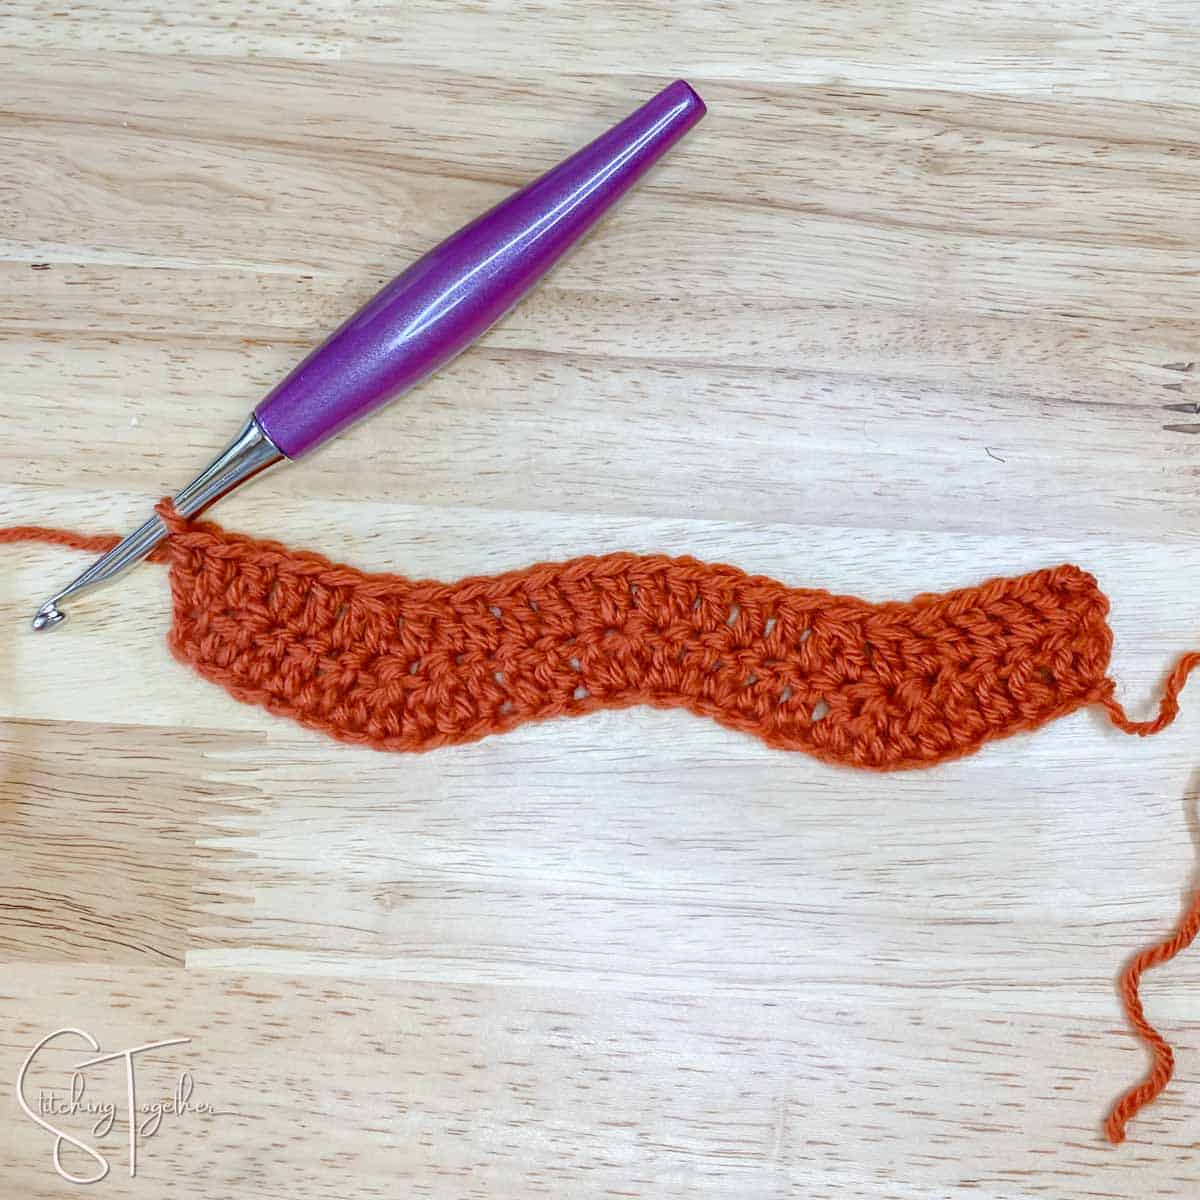 a few rows of competed ripple stitch in orange yarn